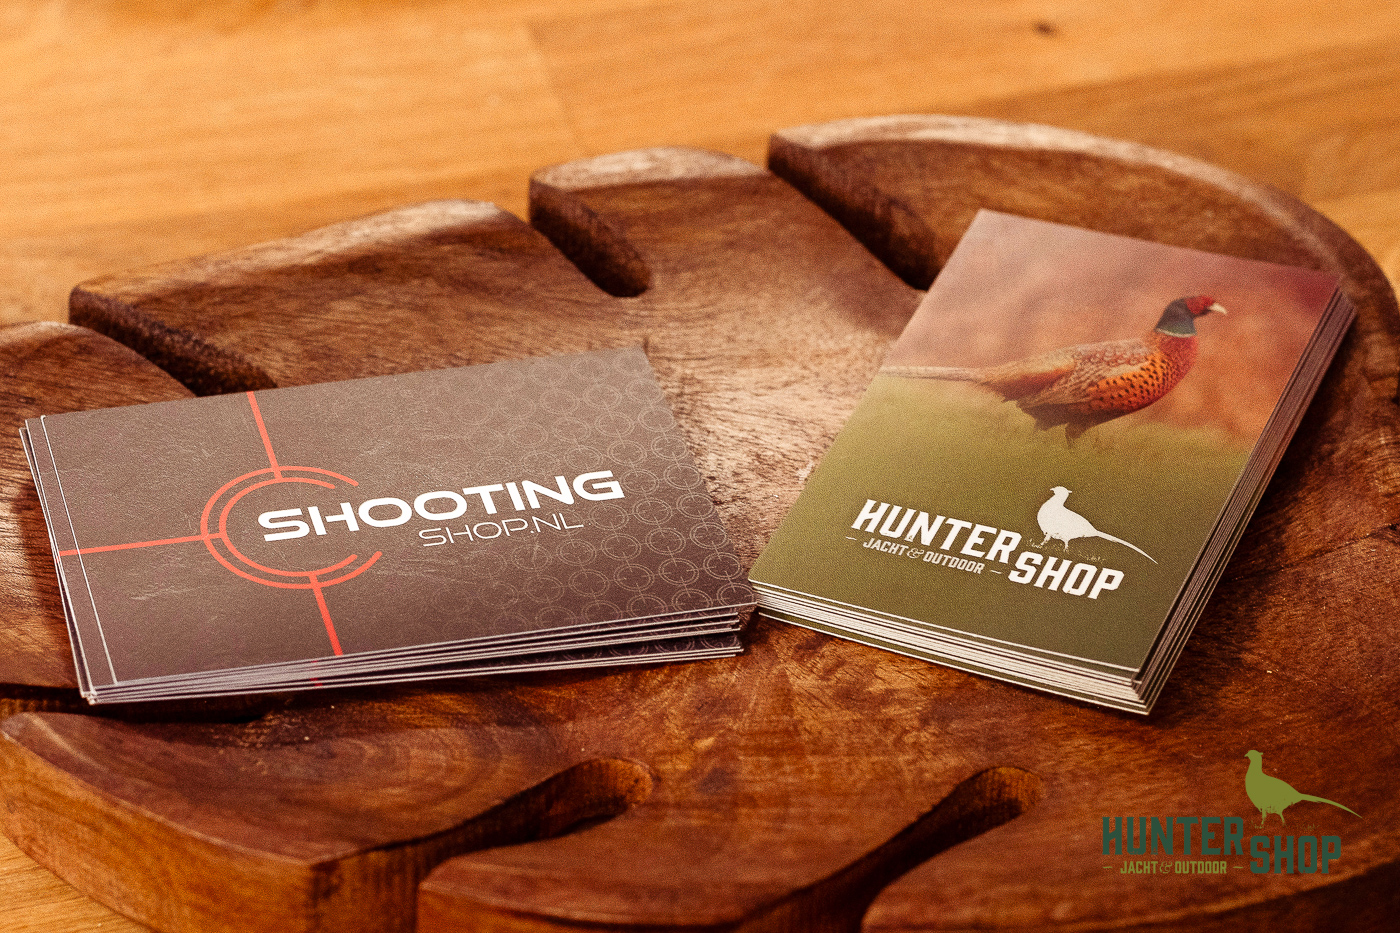 Hunter shootingshop -152-1